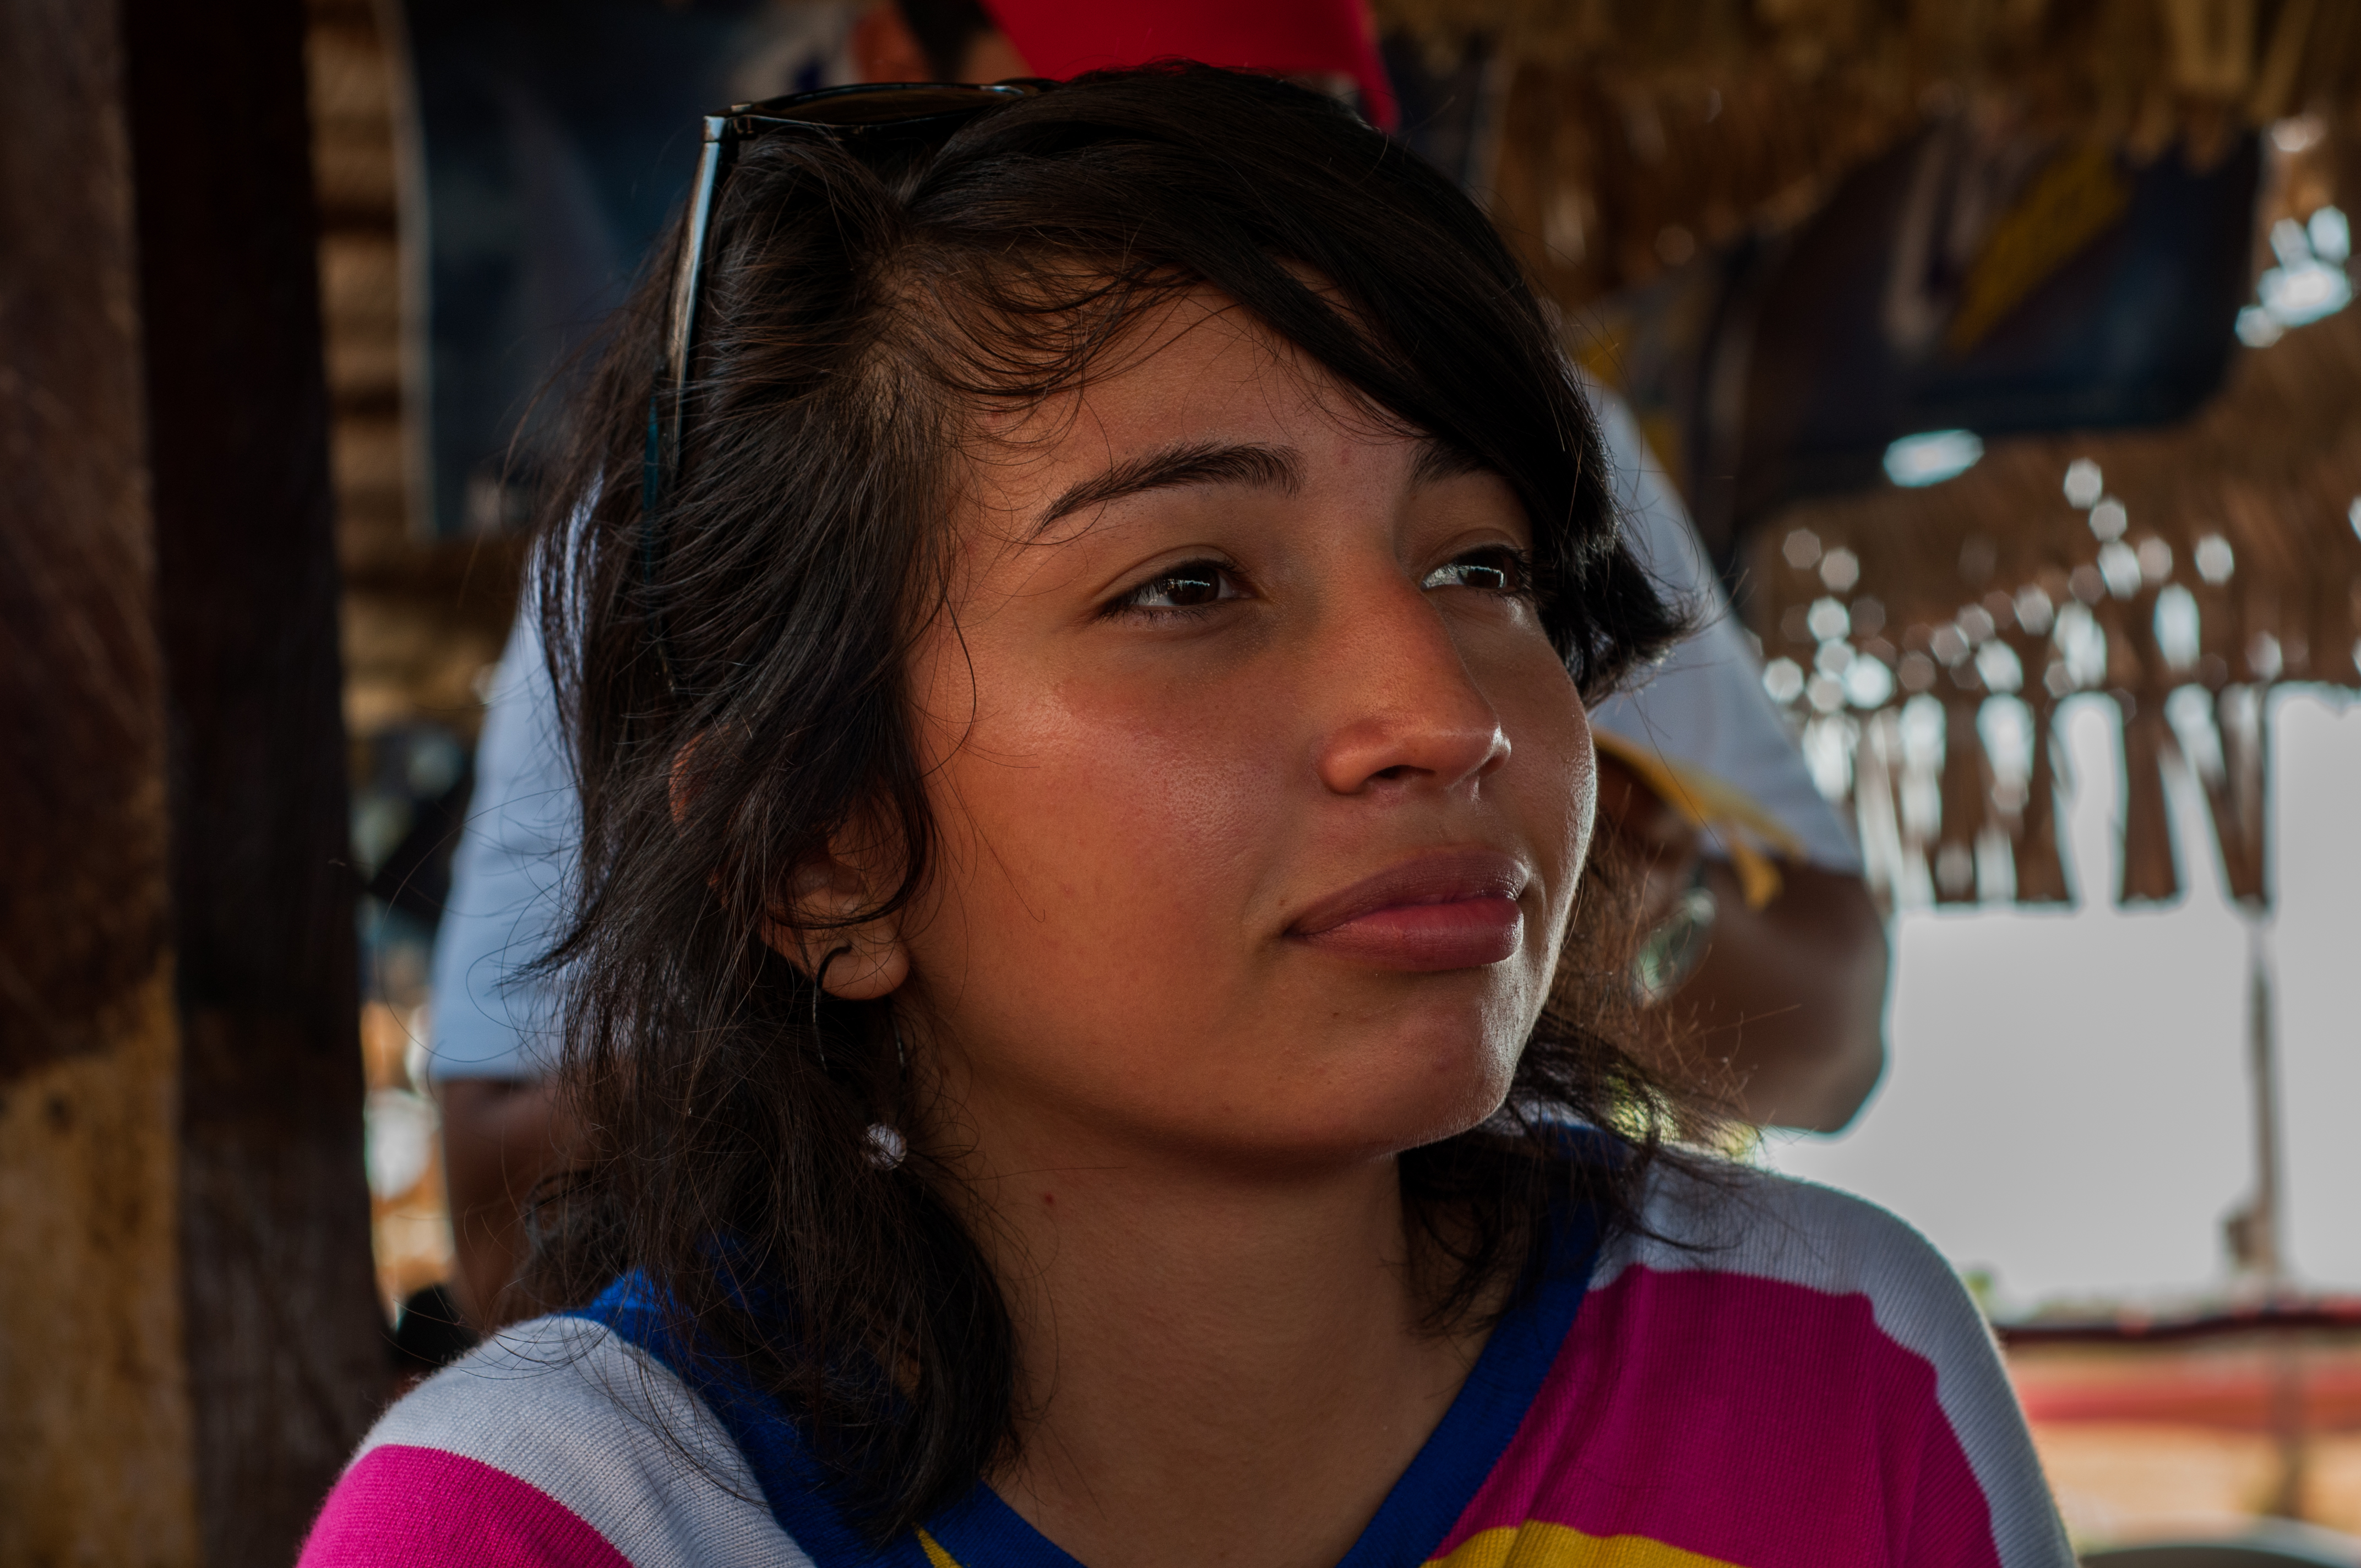 Maracaibo typical girl.jpg. 